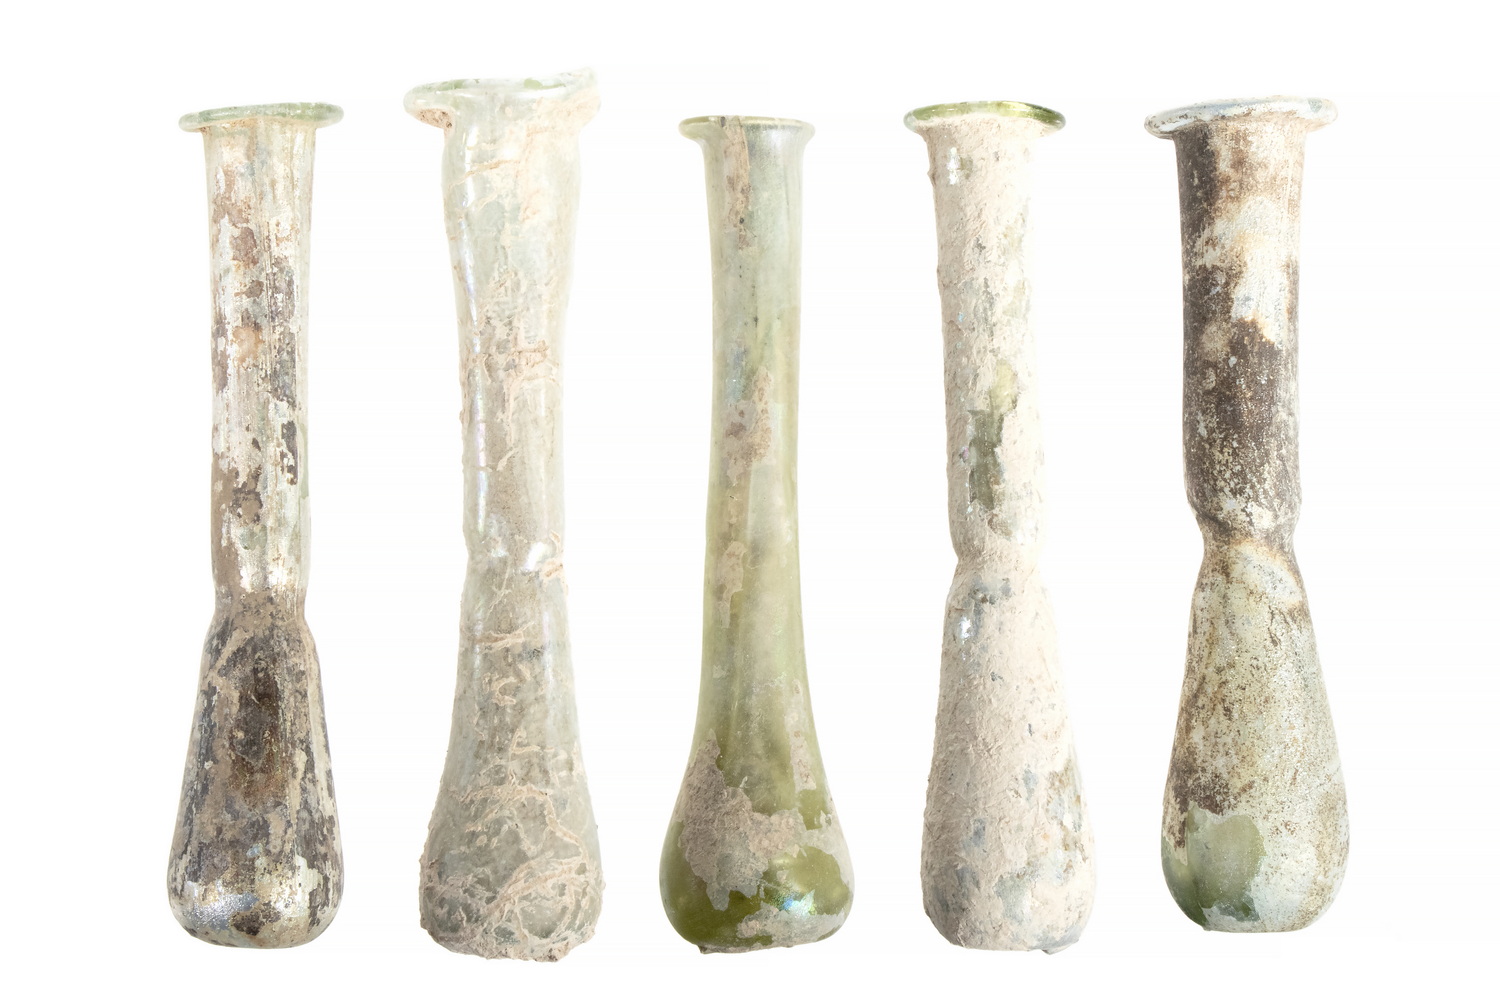  5 ANCIENT ROMAN GLASS BOTTLES 2b2d73